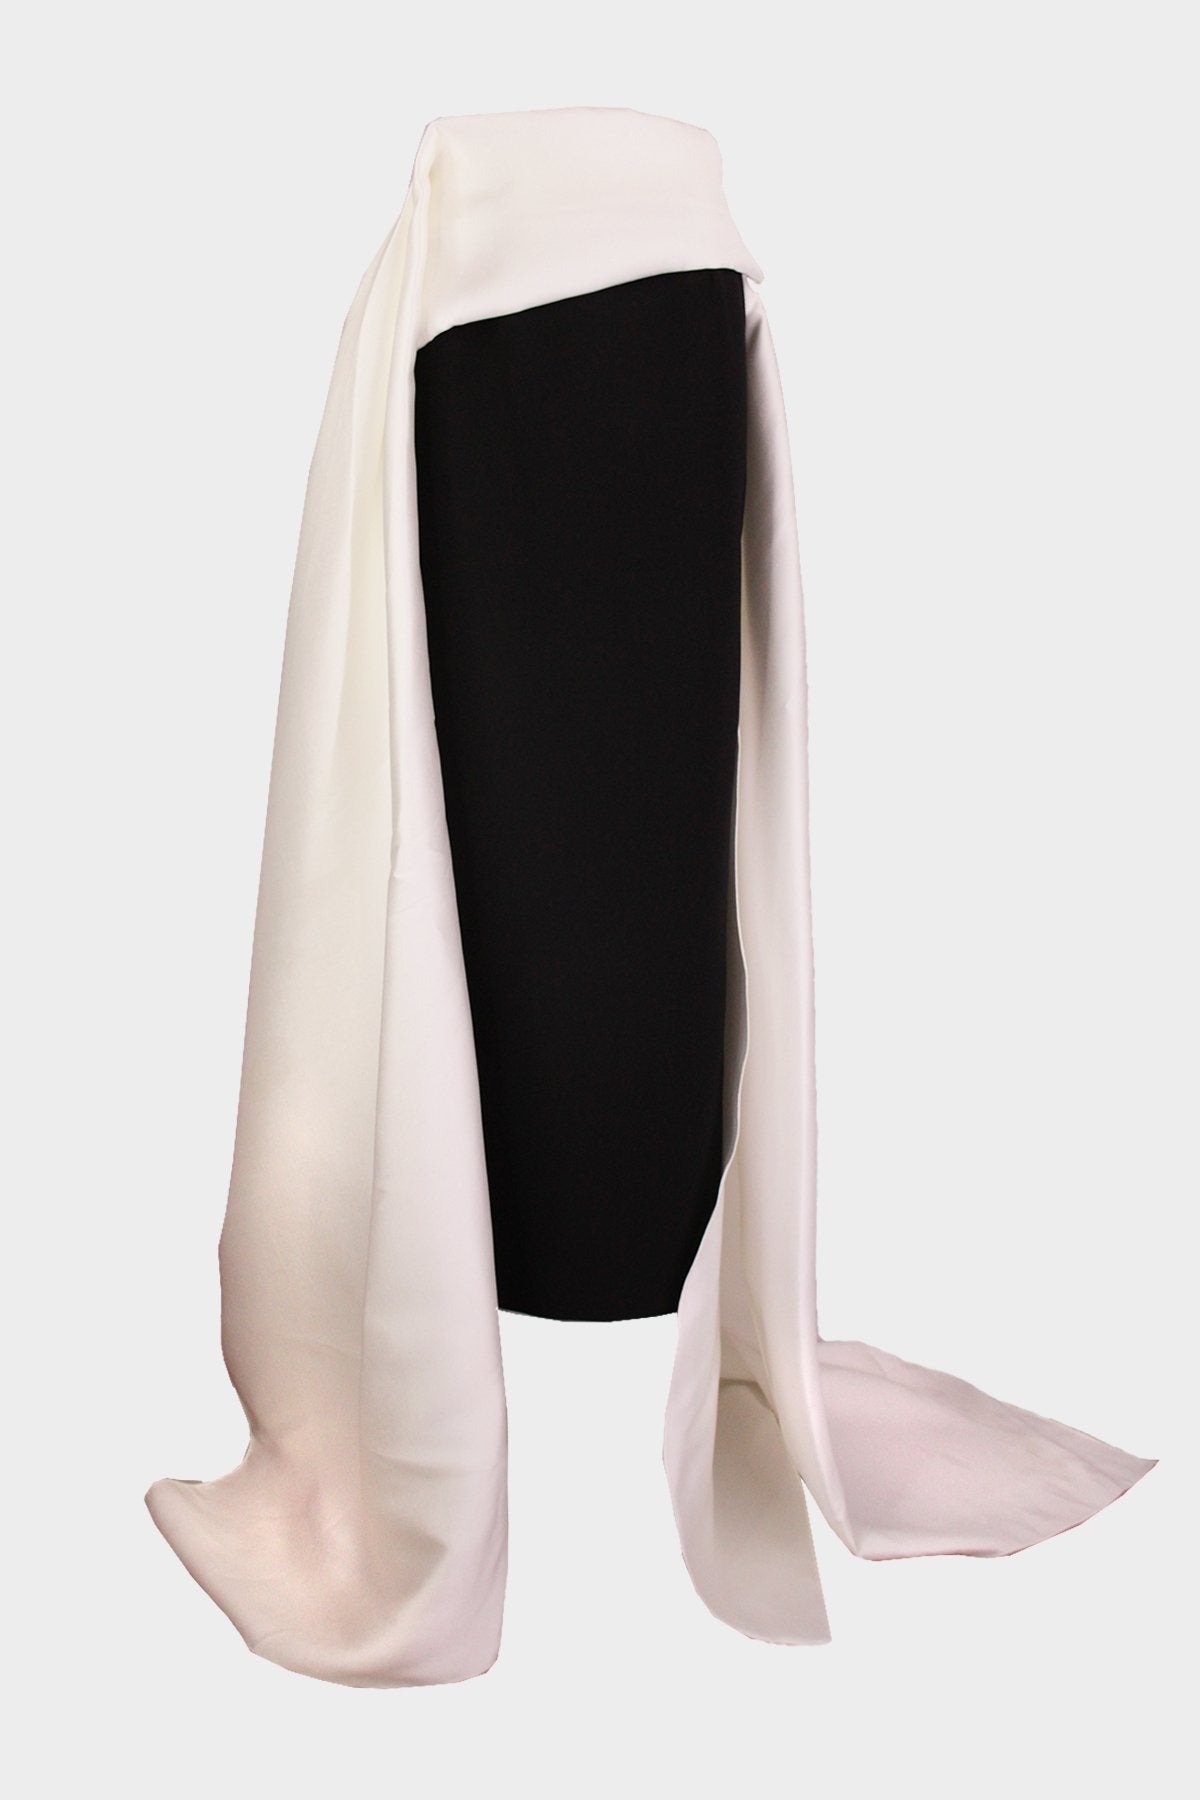 Nyla Skirt in Cream/Black - shop-olivia.com